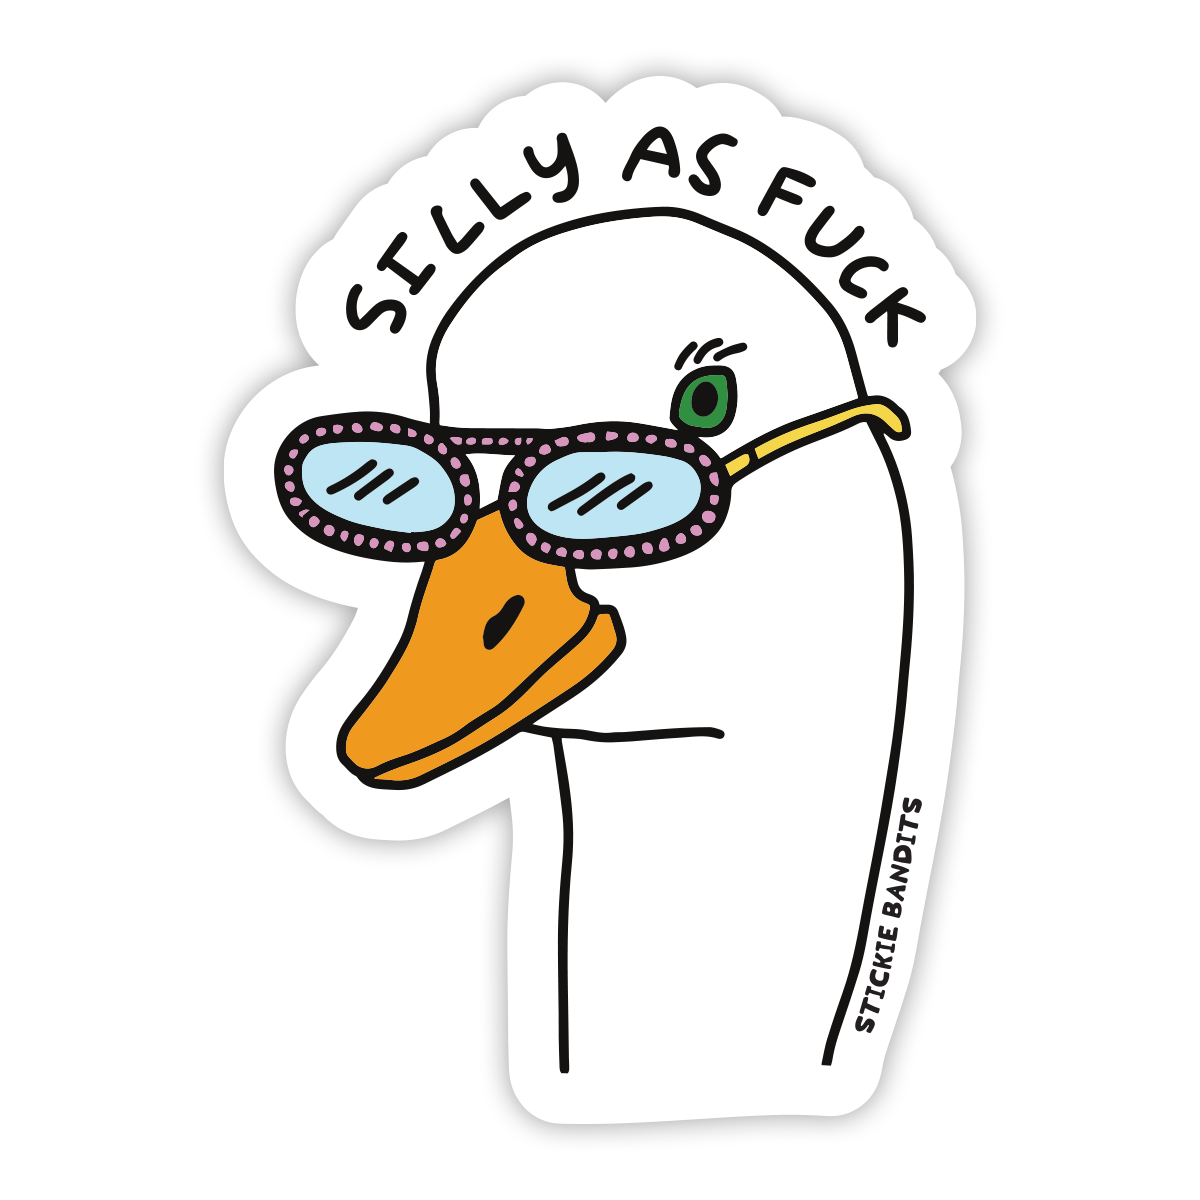 Silly Goose Sticker